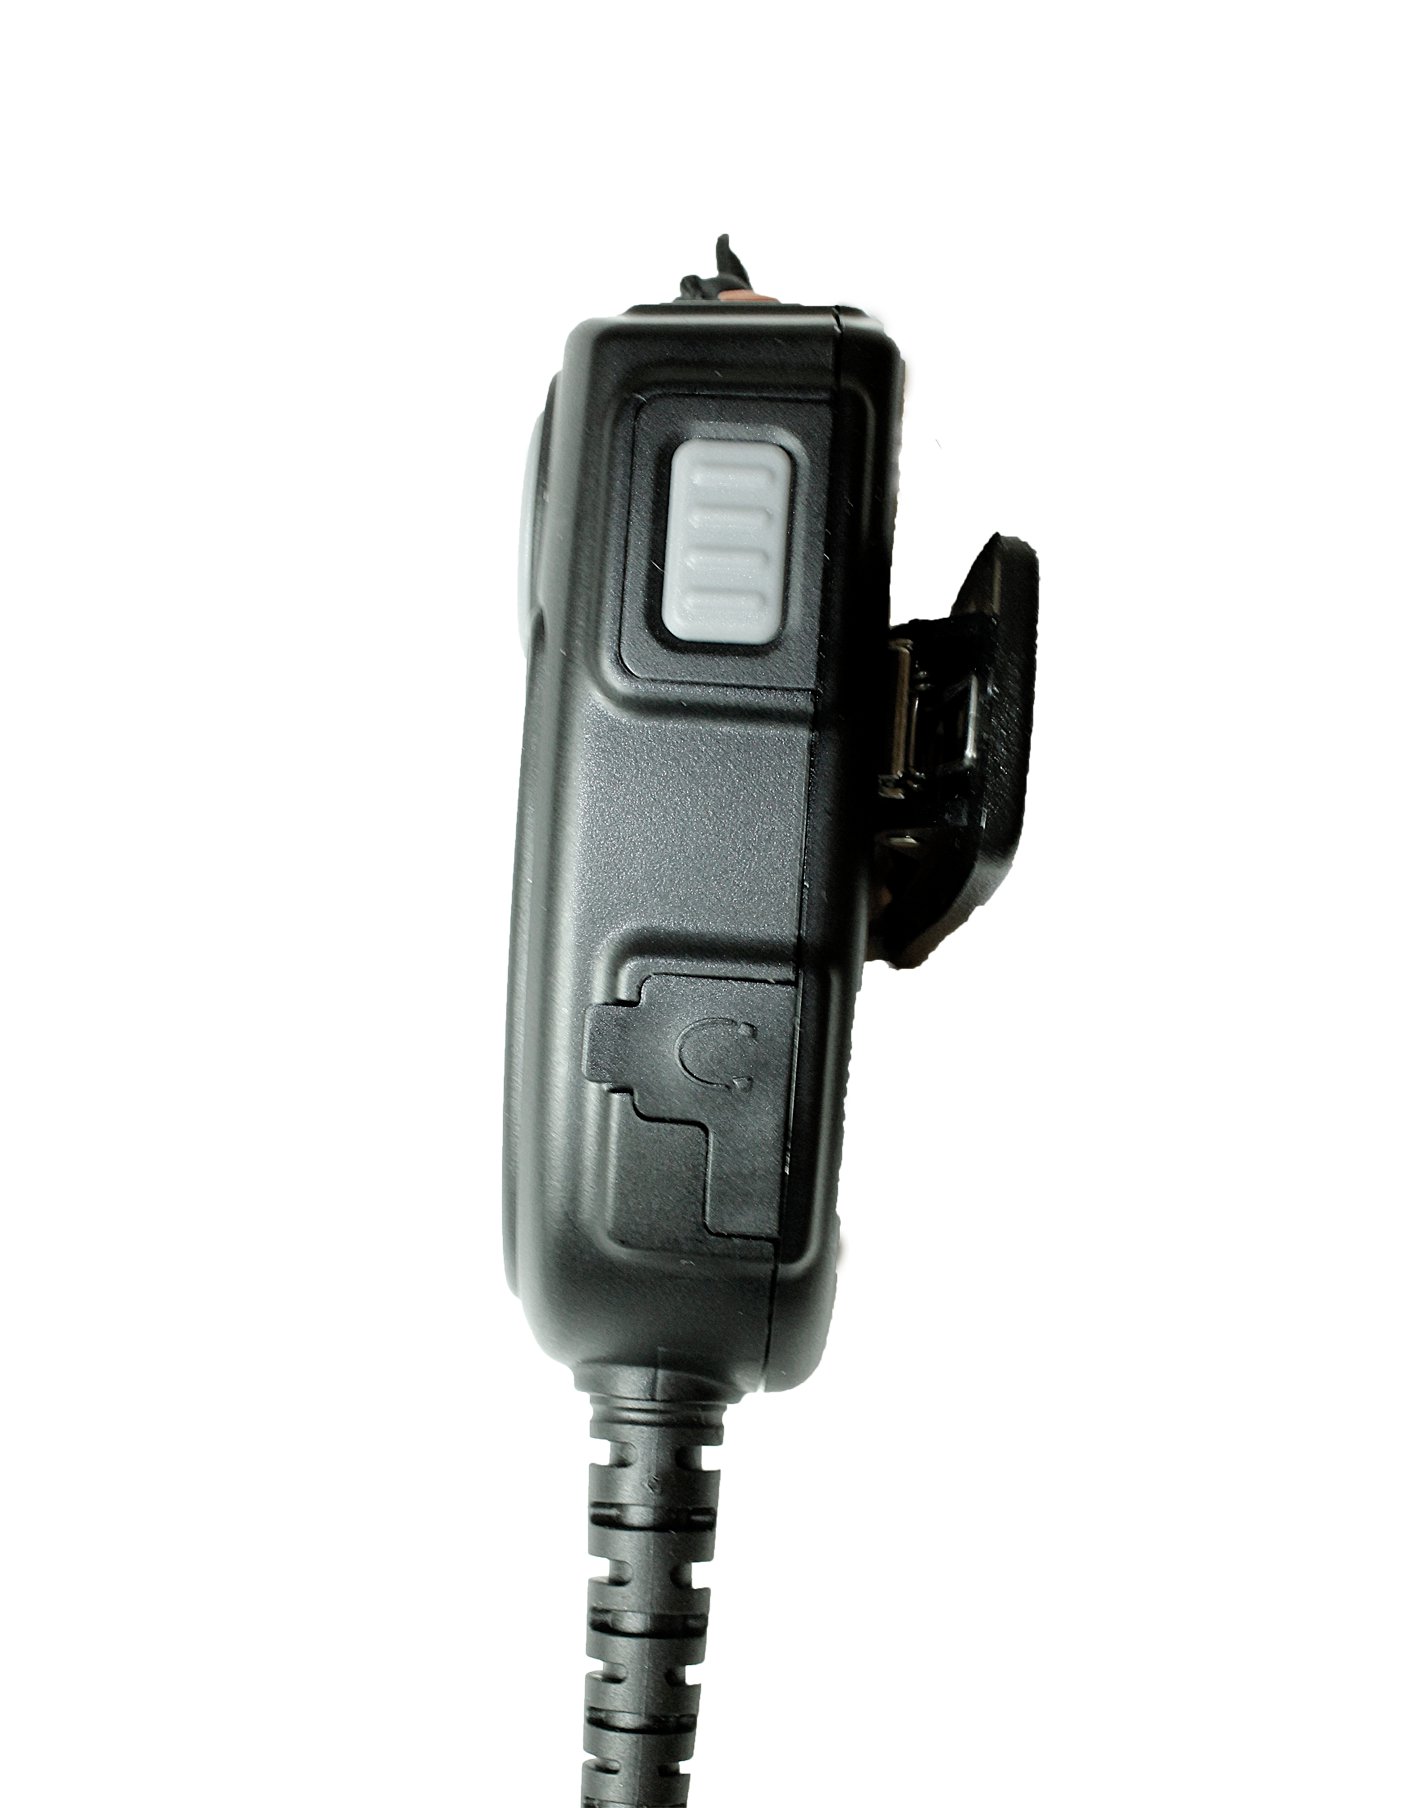 TITAN Lautsprechermikrofon MM20 mit Nexus 01 passend für Hytera PD605, PD665, PD68X, X1e